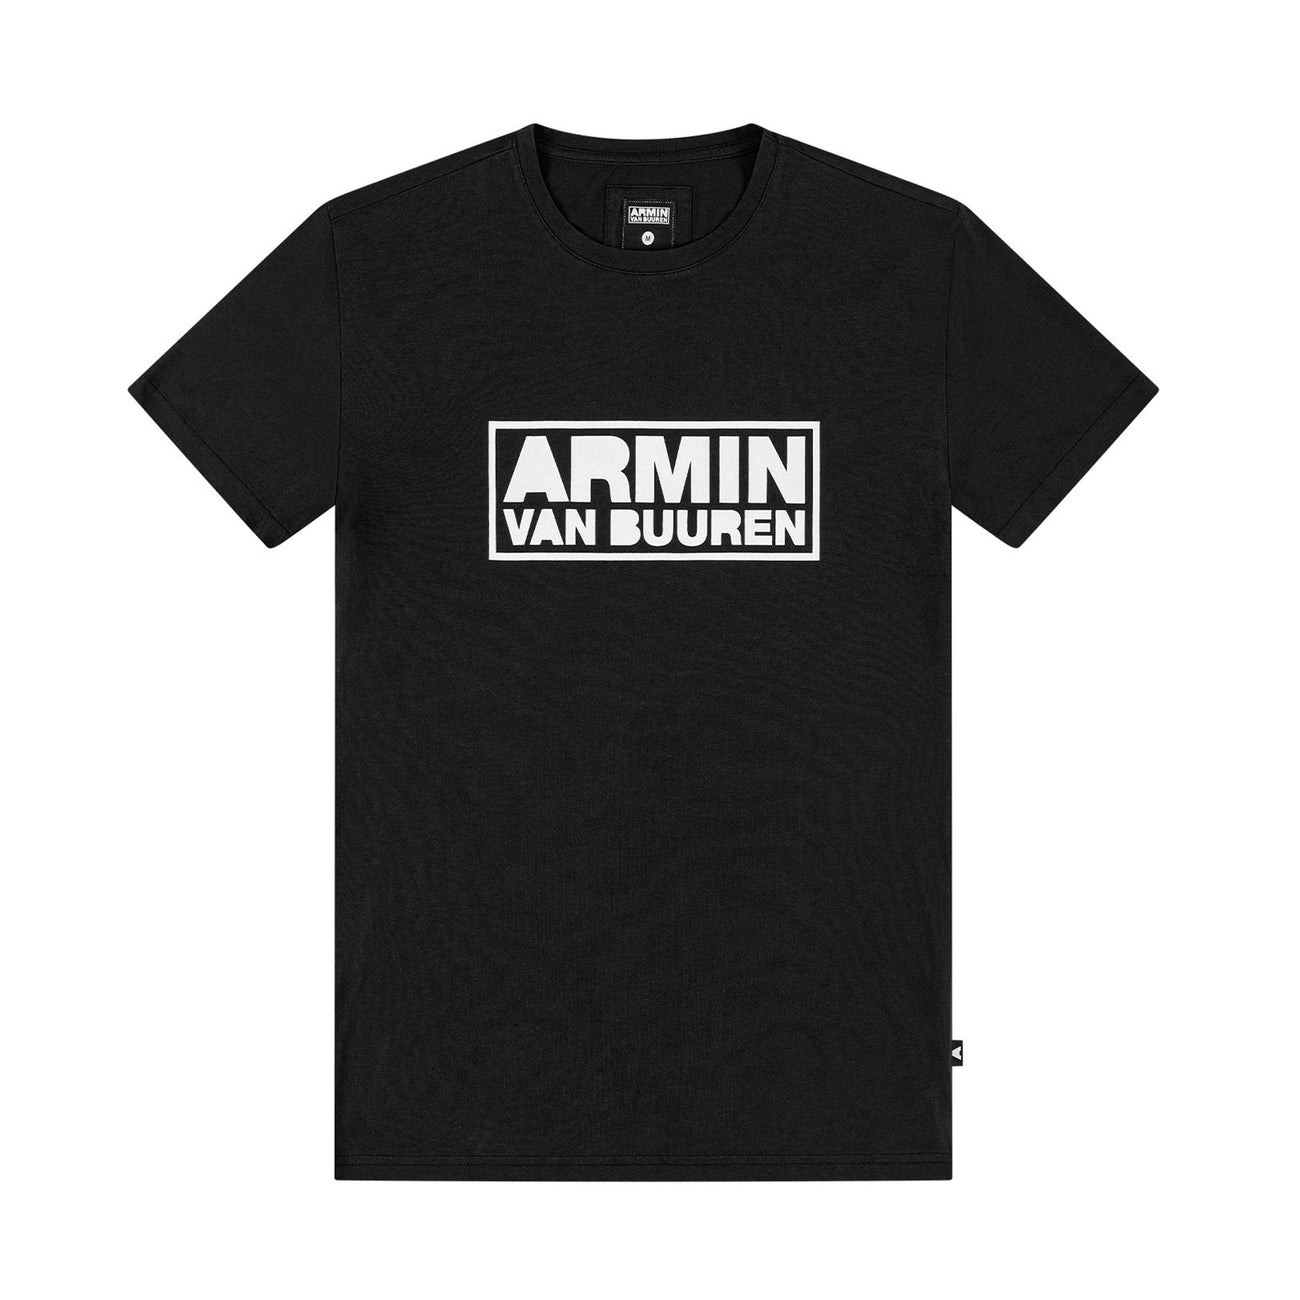 Armin van Buuren logo t-shirt black